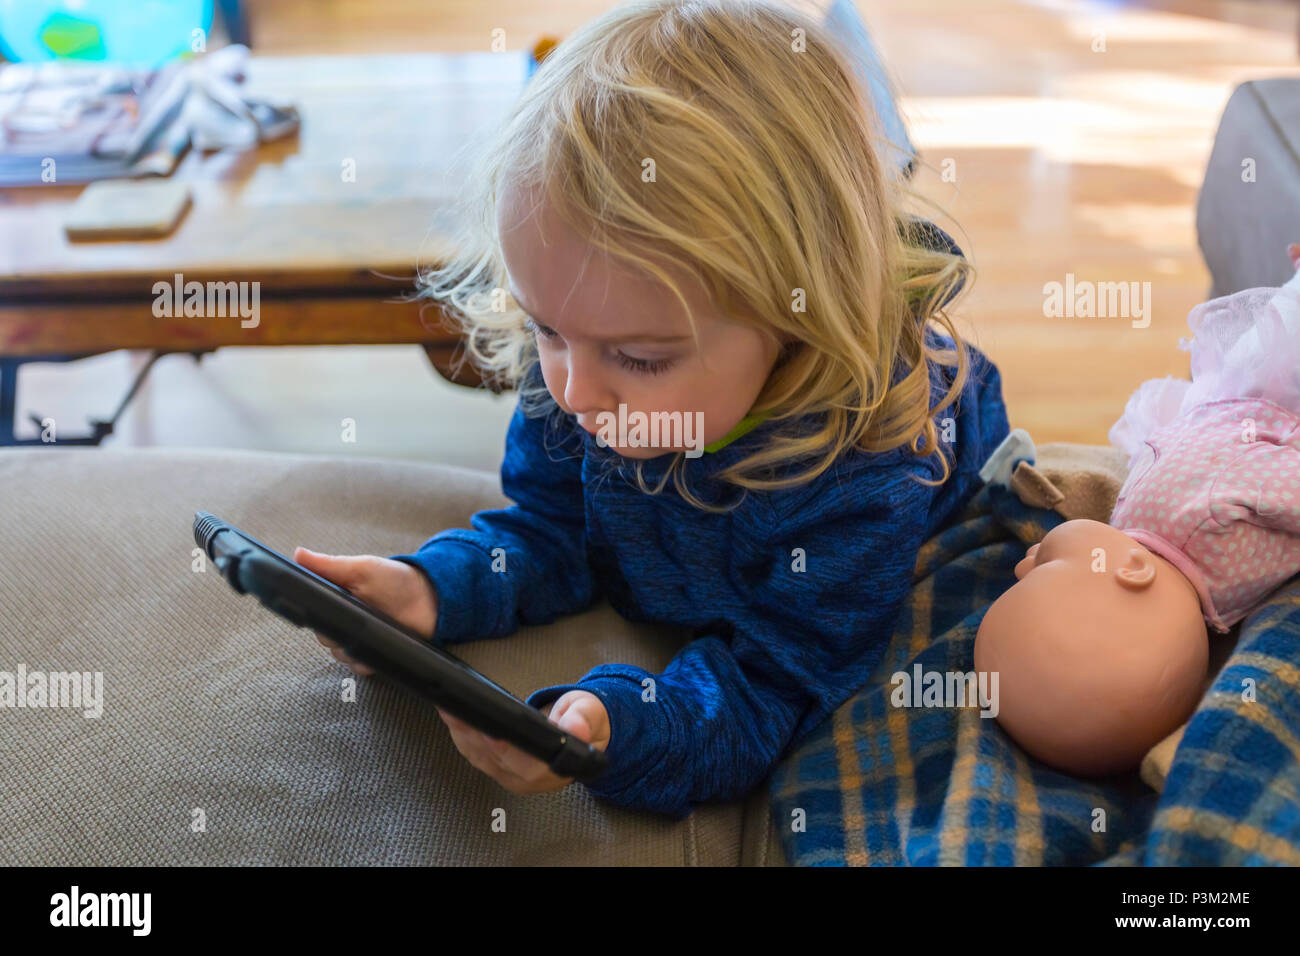 2 year old girl looking at iPad Stock Photo